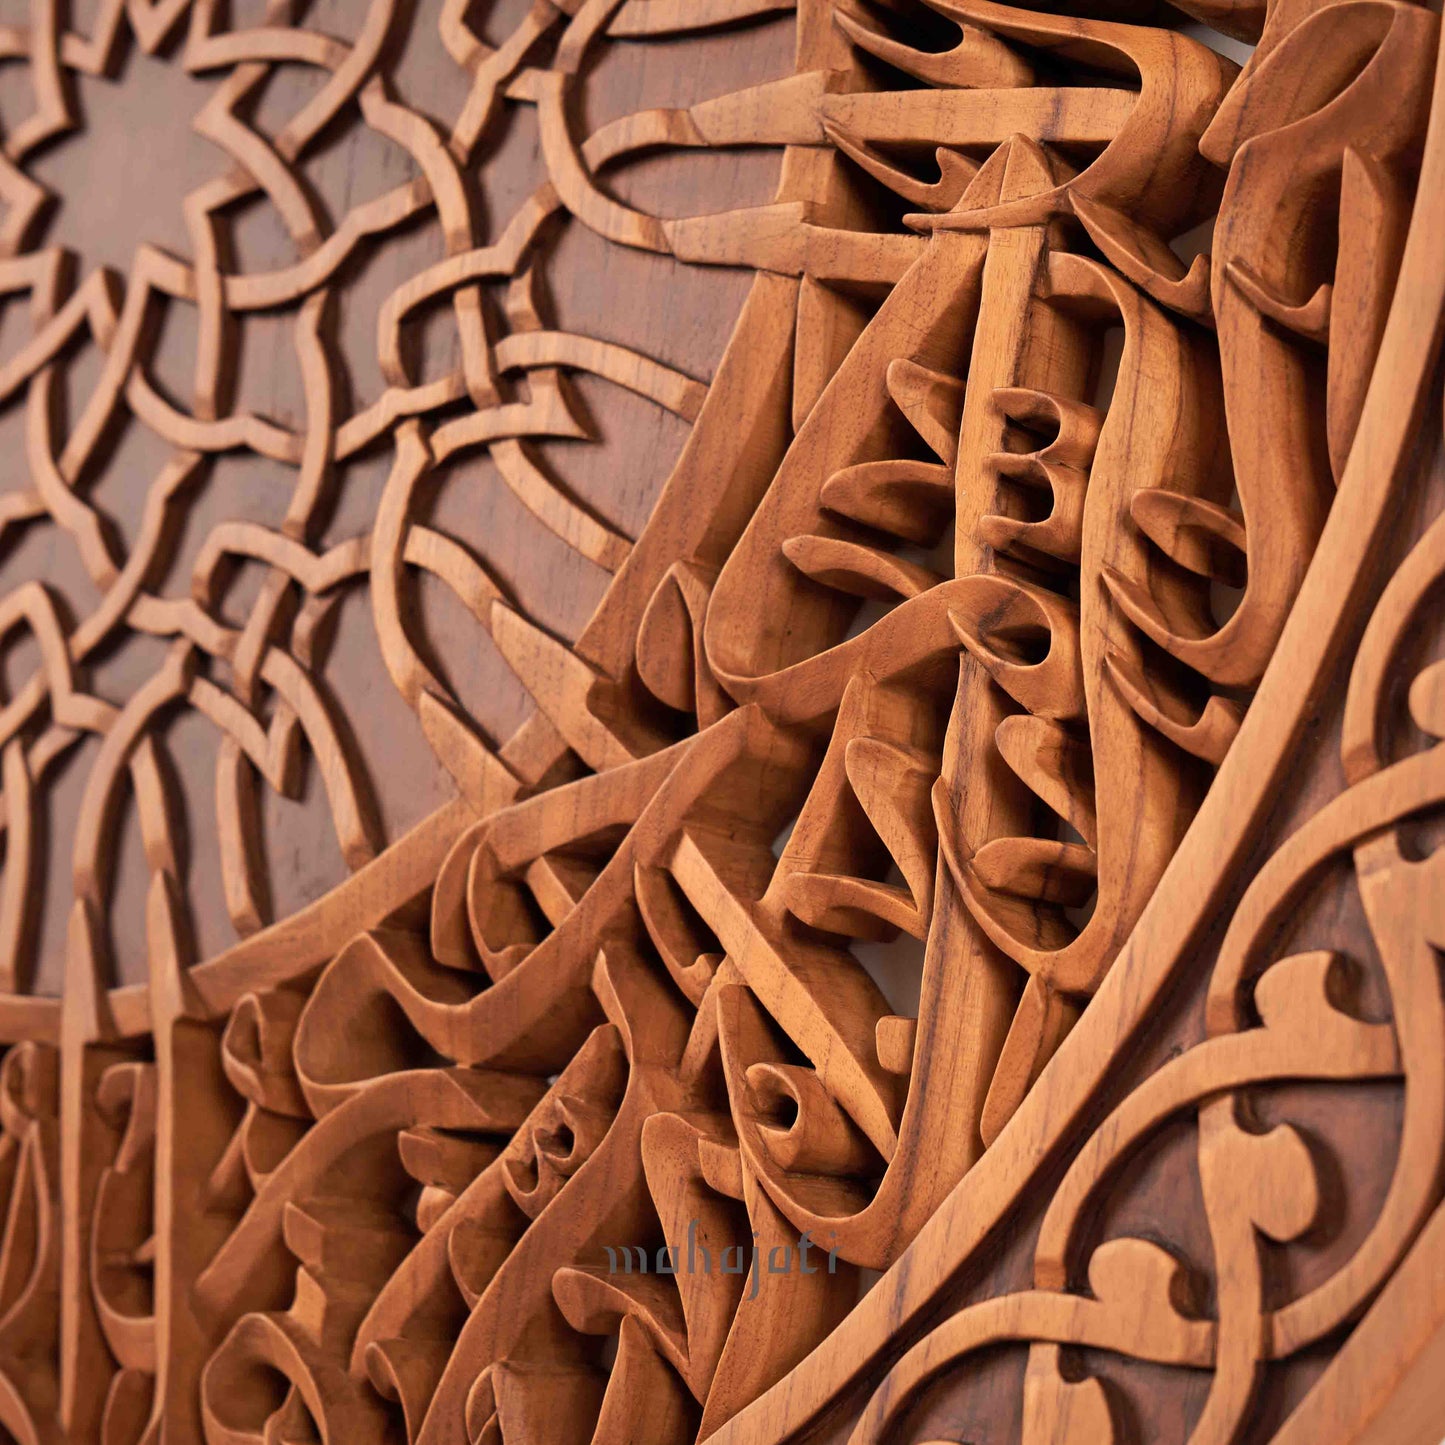 Islamic Calligraphy Wall Art Home Decoration